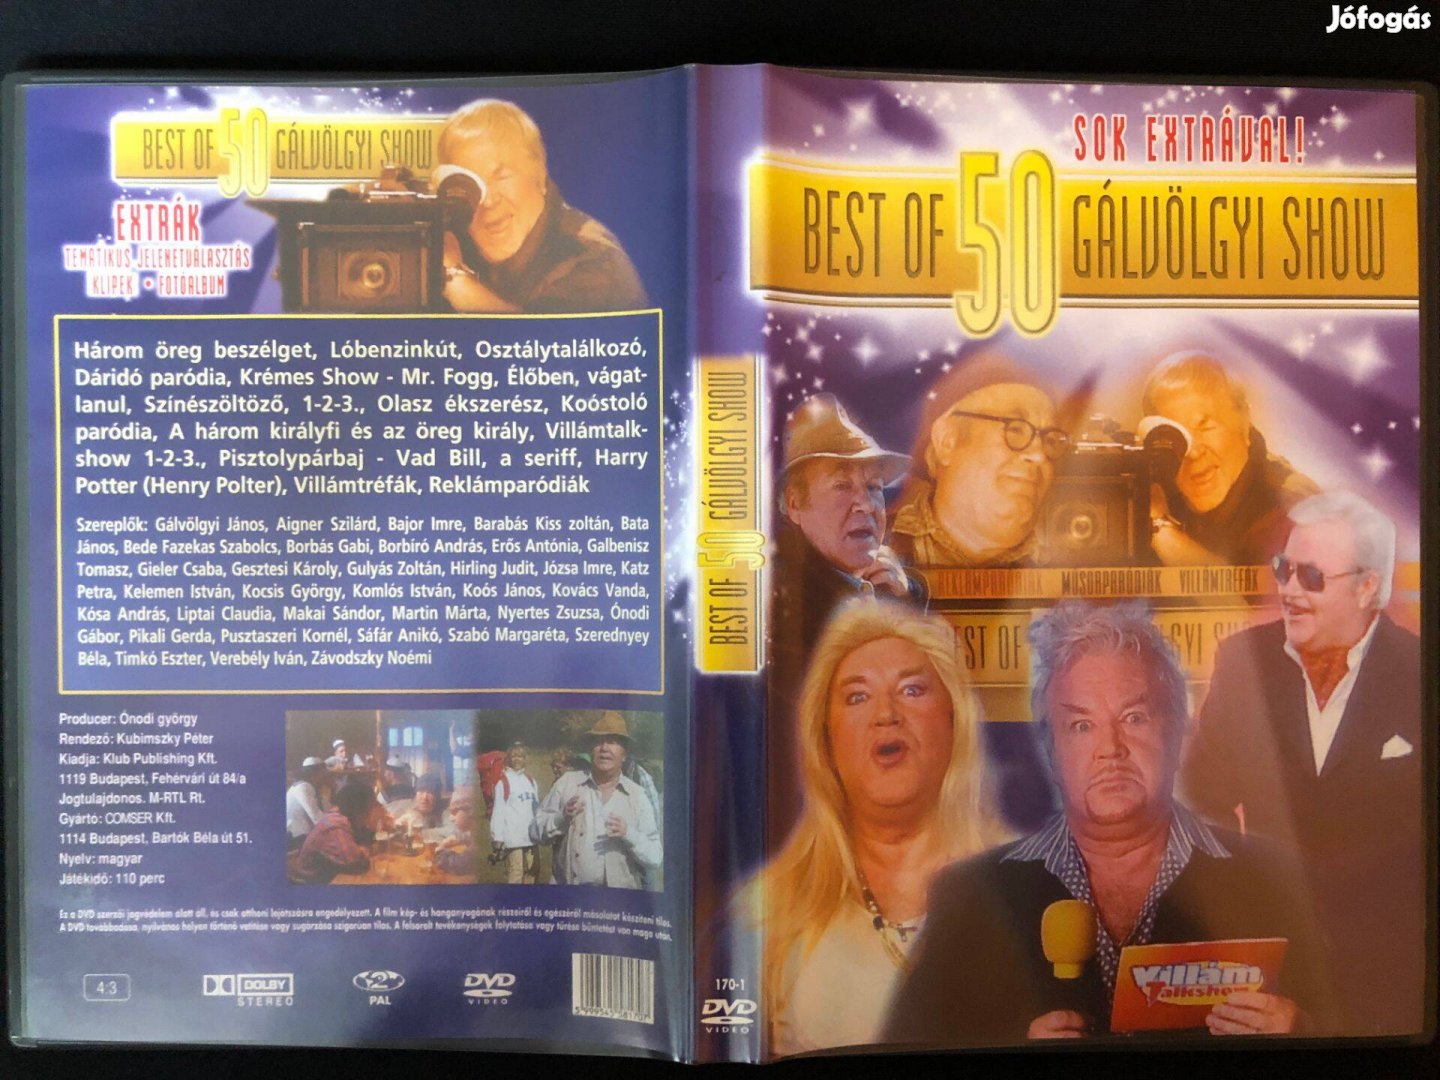 Best of 50 Gálvölgyi Show DVD